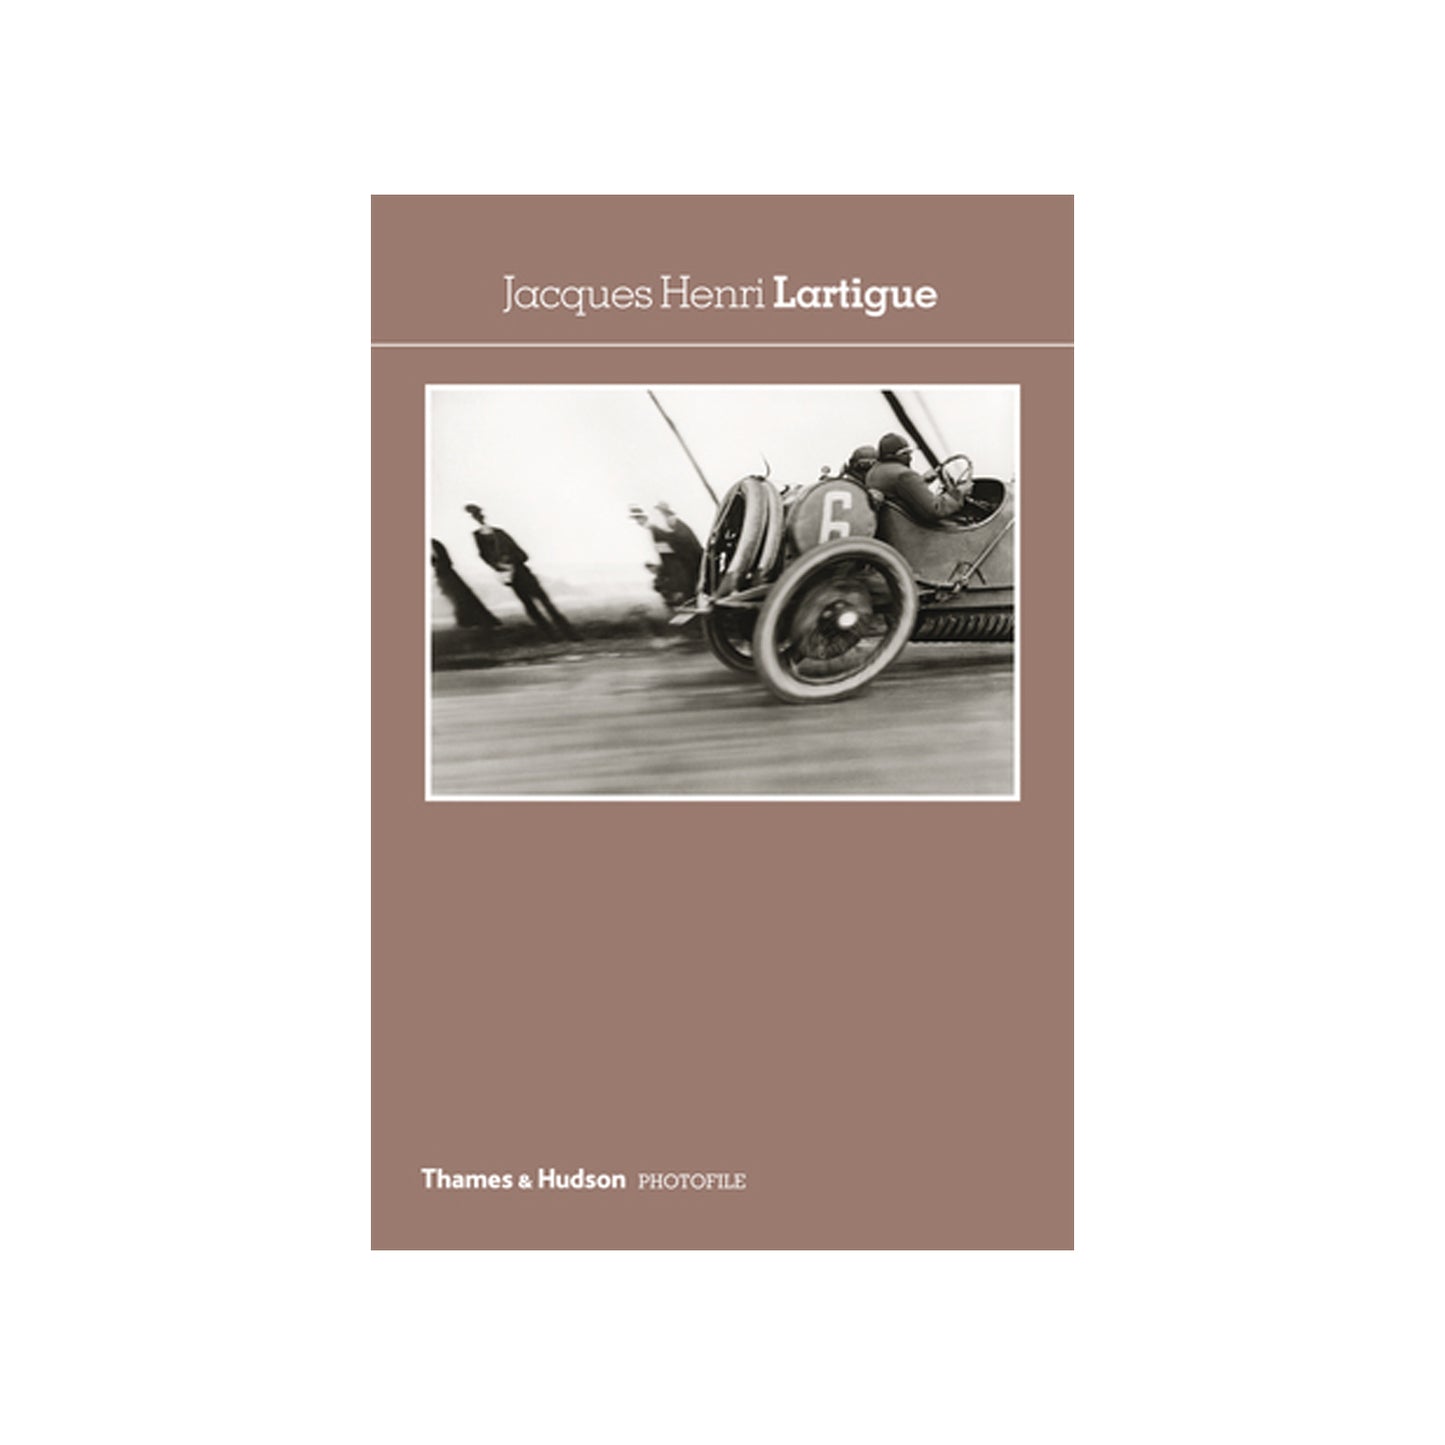 Jacques Henri Photofile Lartigue by Jacques Henri Lartigue